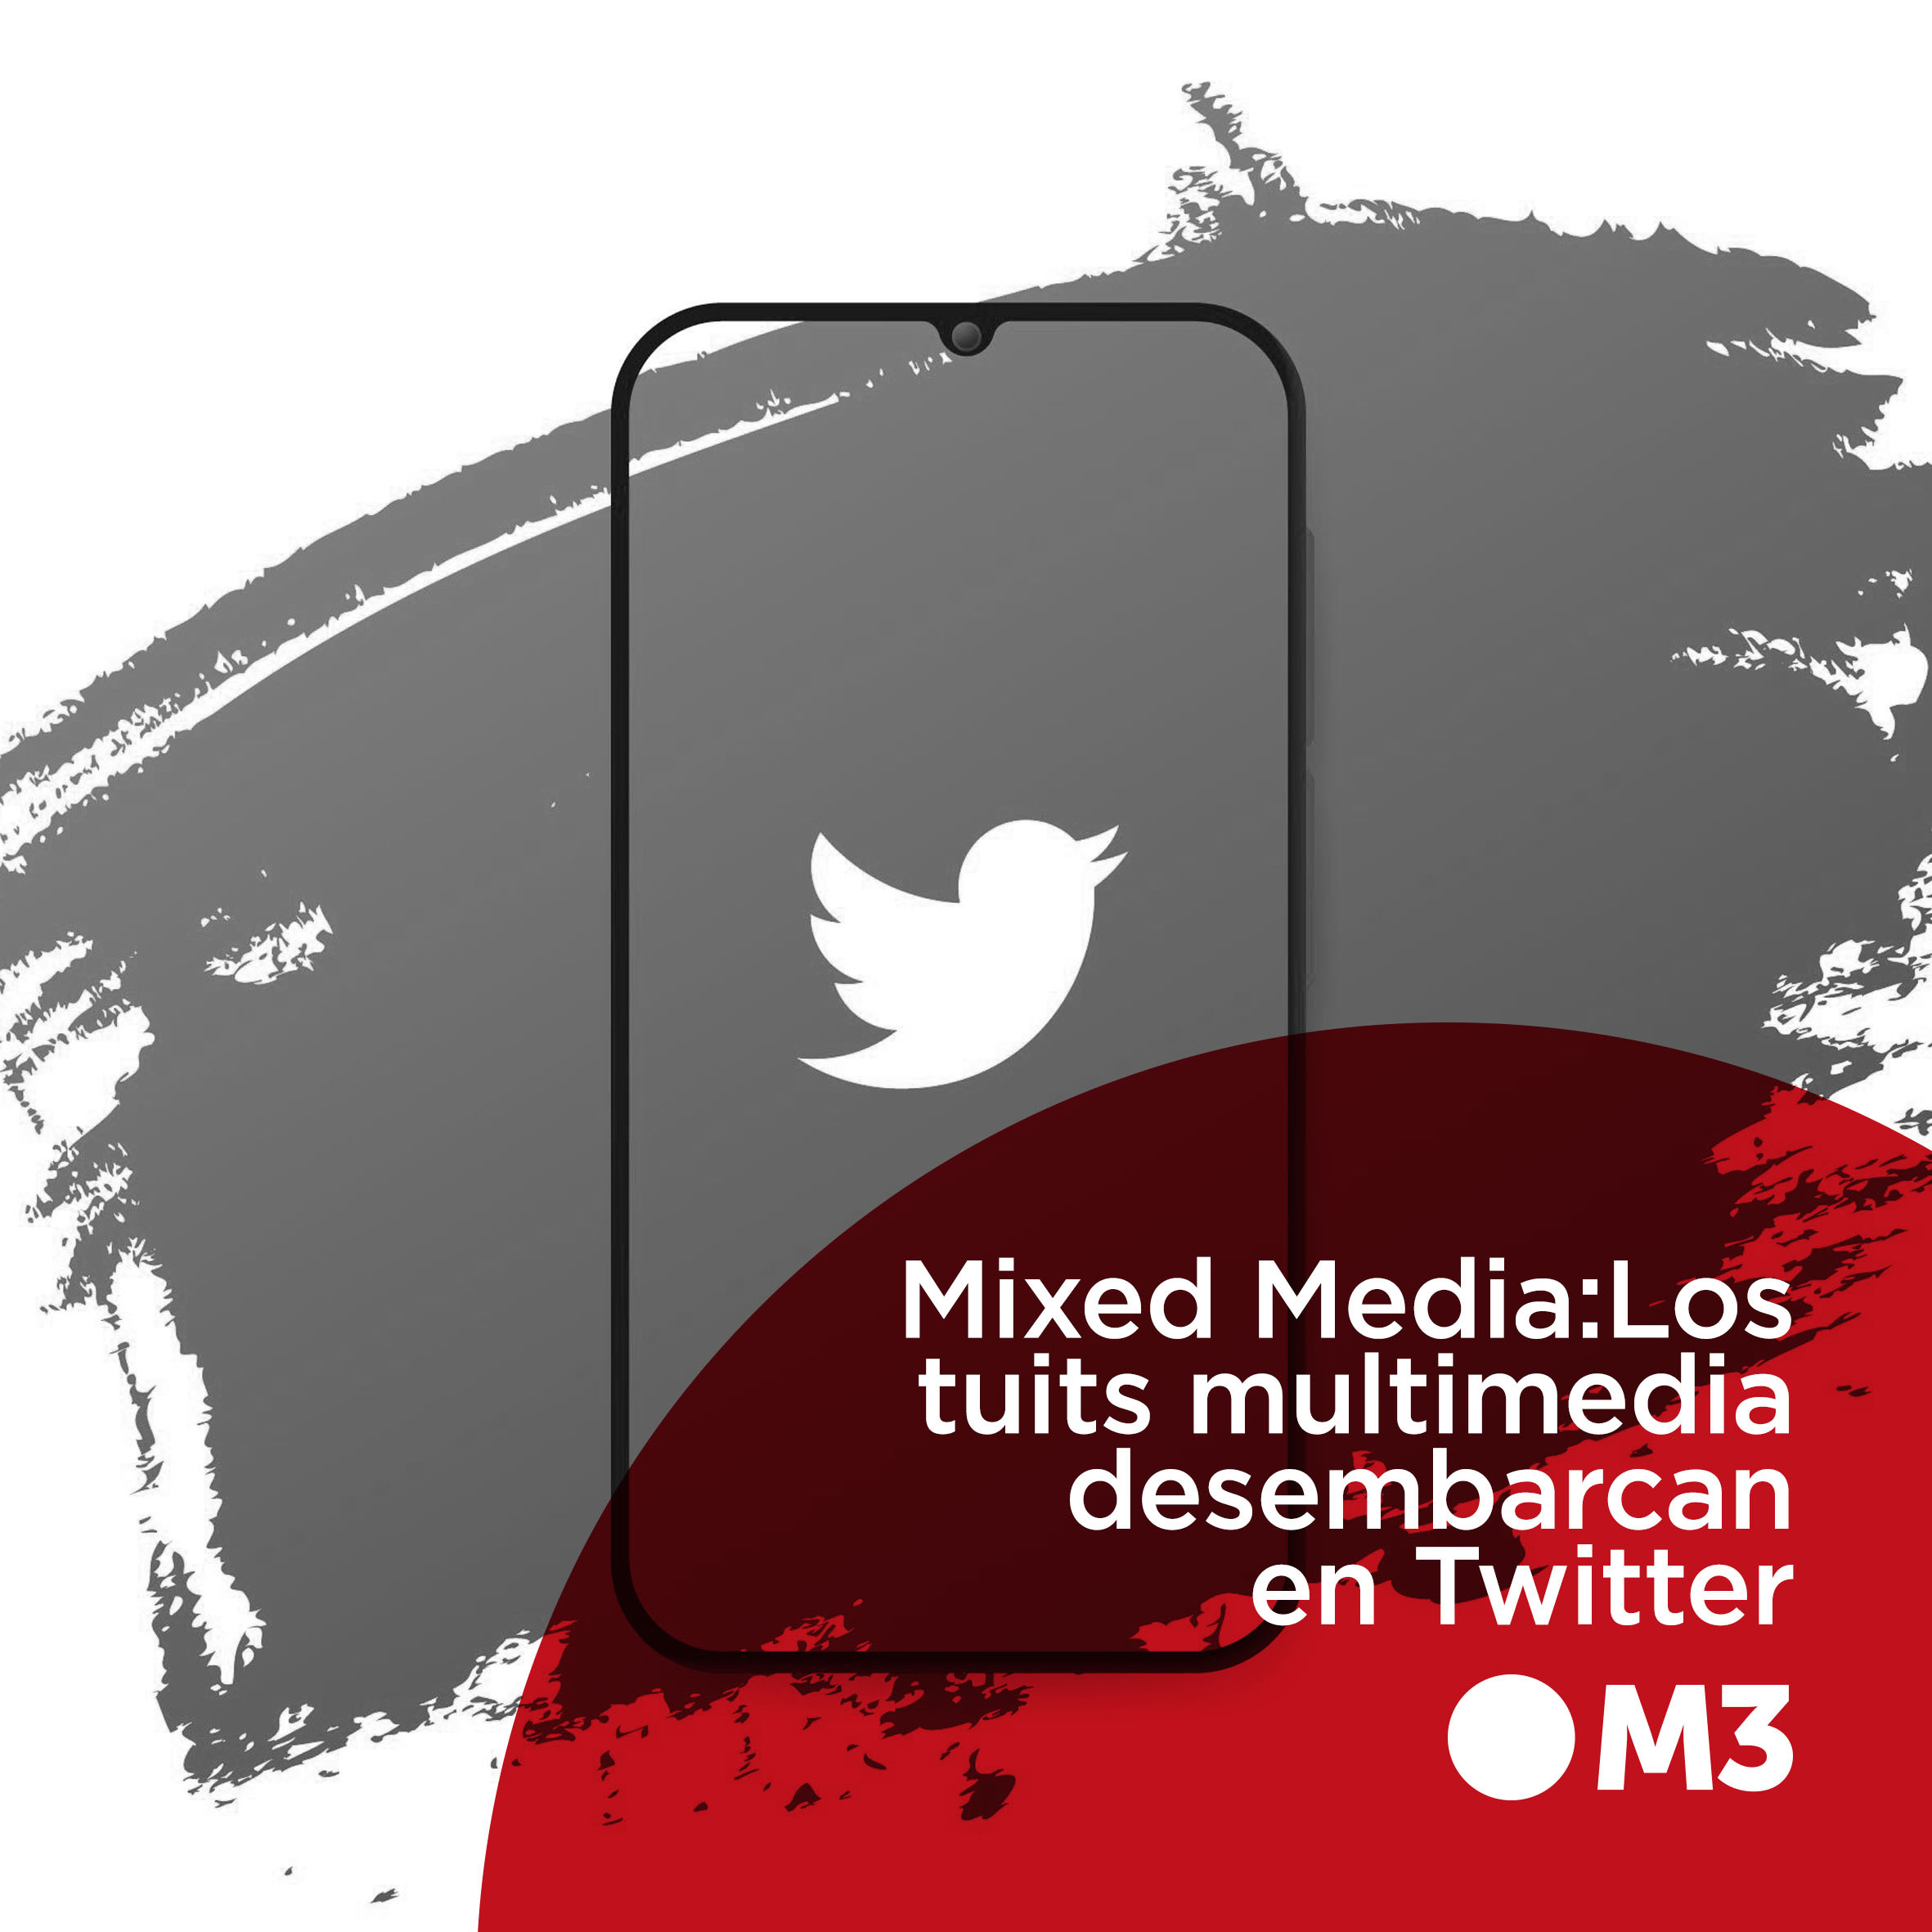 Mixed Media: Los tuits multimedia desembarcan en Twitter